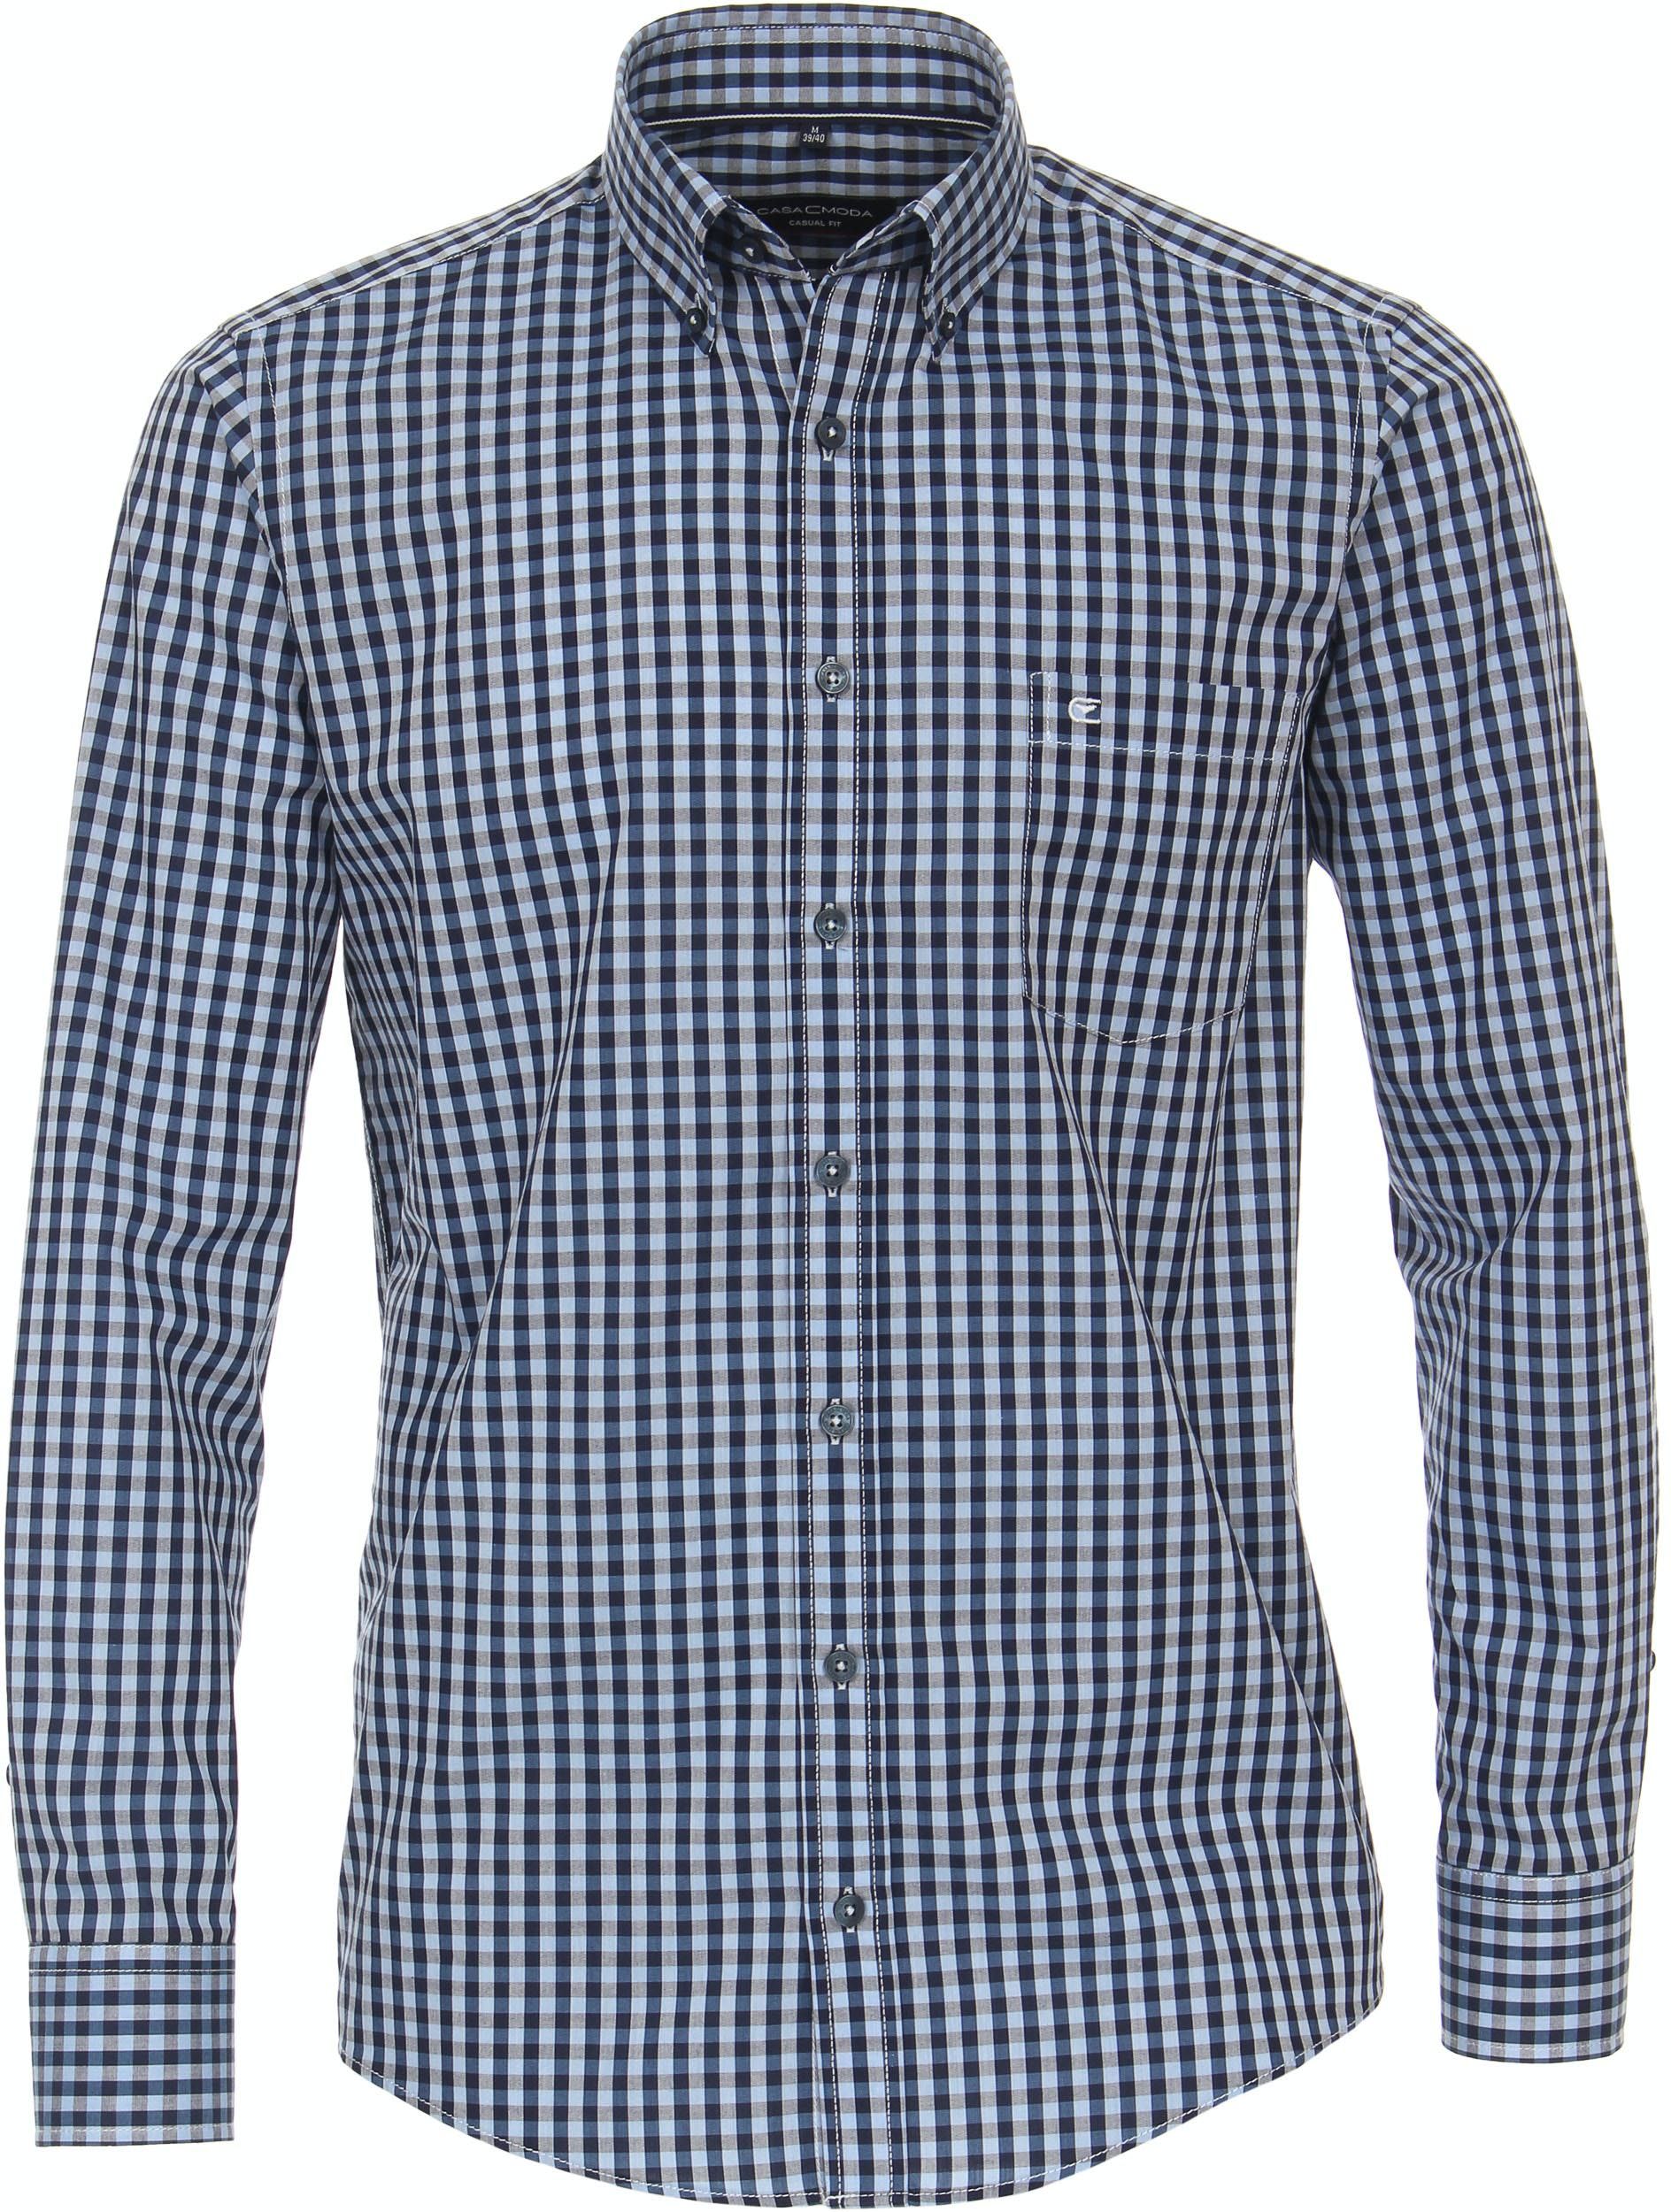 Casa Moda Shirt Checkered Blue Dark Blue size 4XL